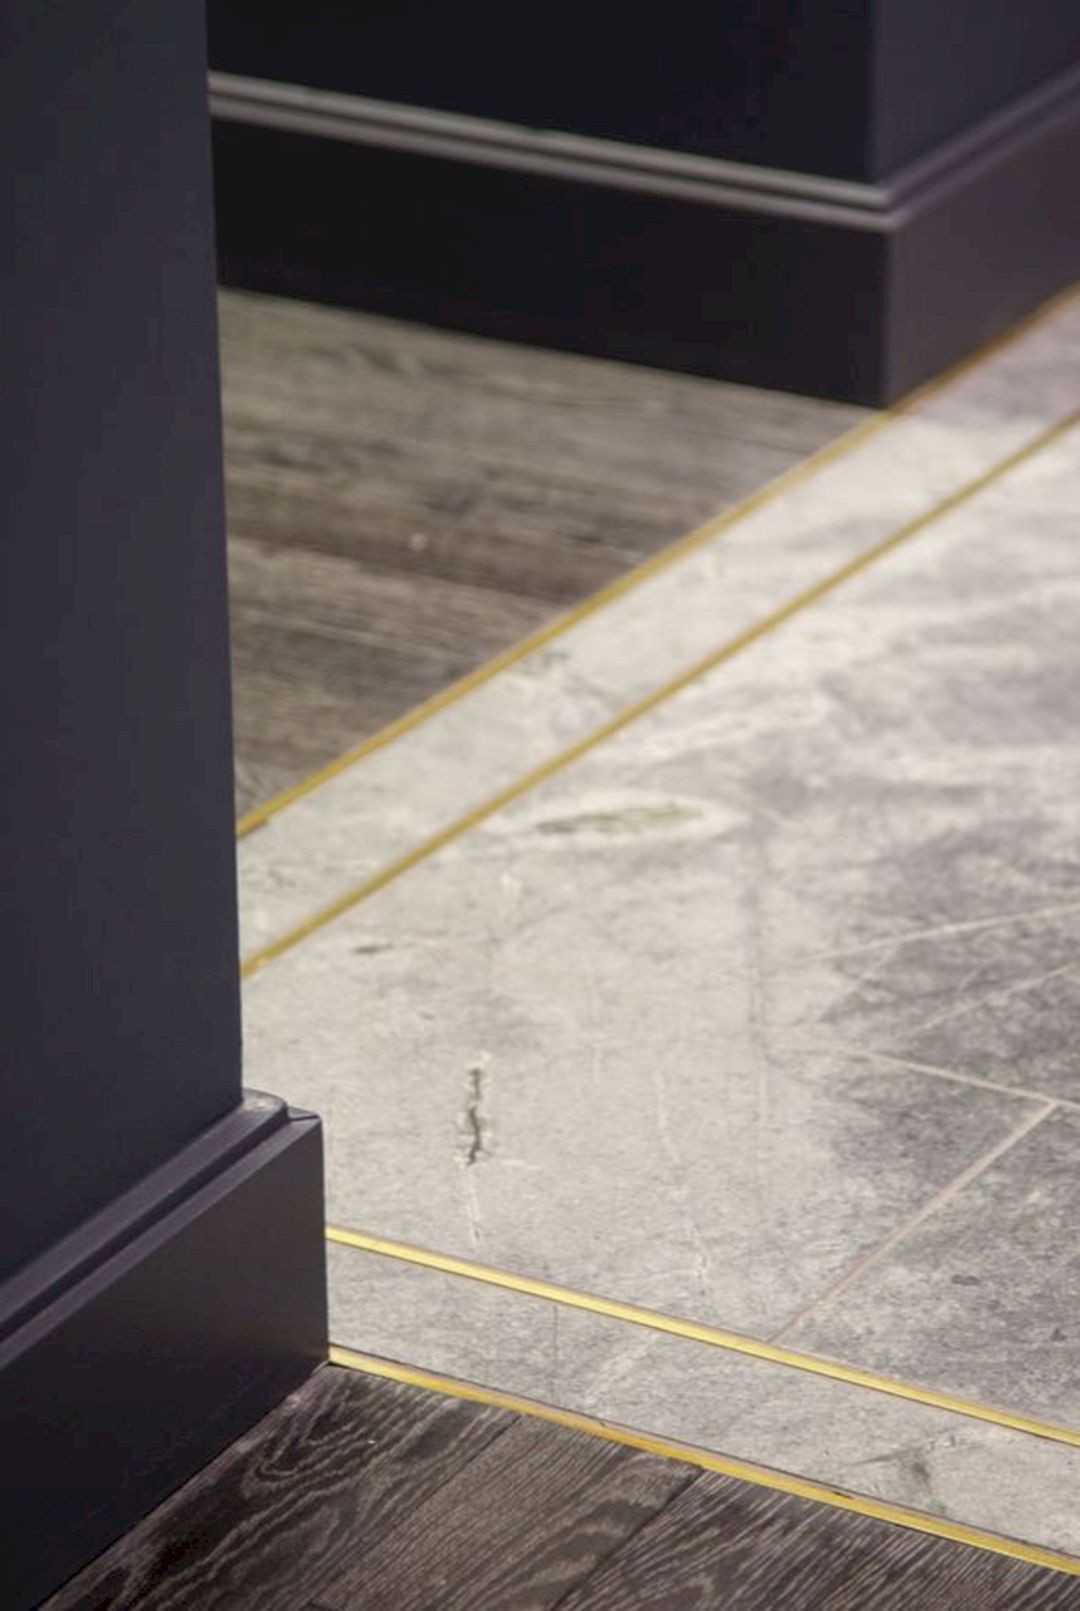 somerset ultimate hardwood floor cleaner of pin by amanda watson on interior ideas inspiration pinterest inside concrete wood floor stone flooring foyer flooring metal floor metal trim